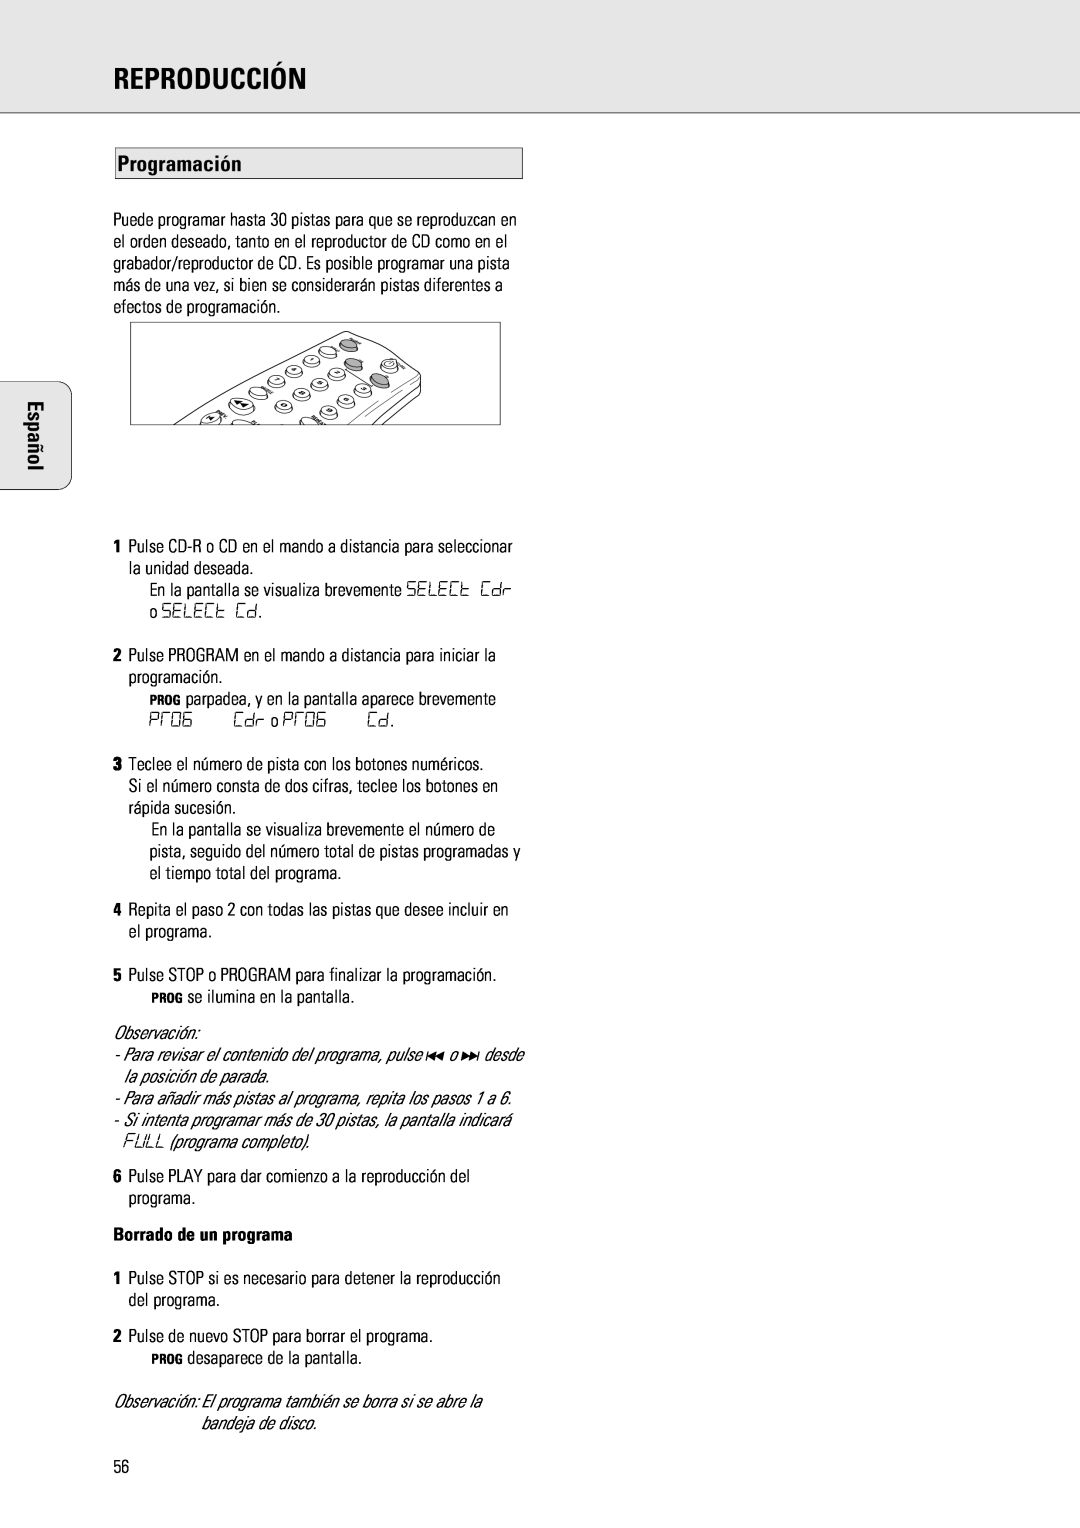 Philips 765 manual Programación, Borrado de un programa, Reproducción, Español 